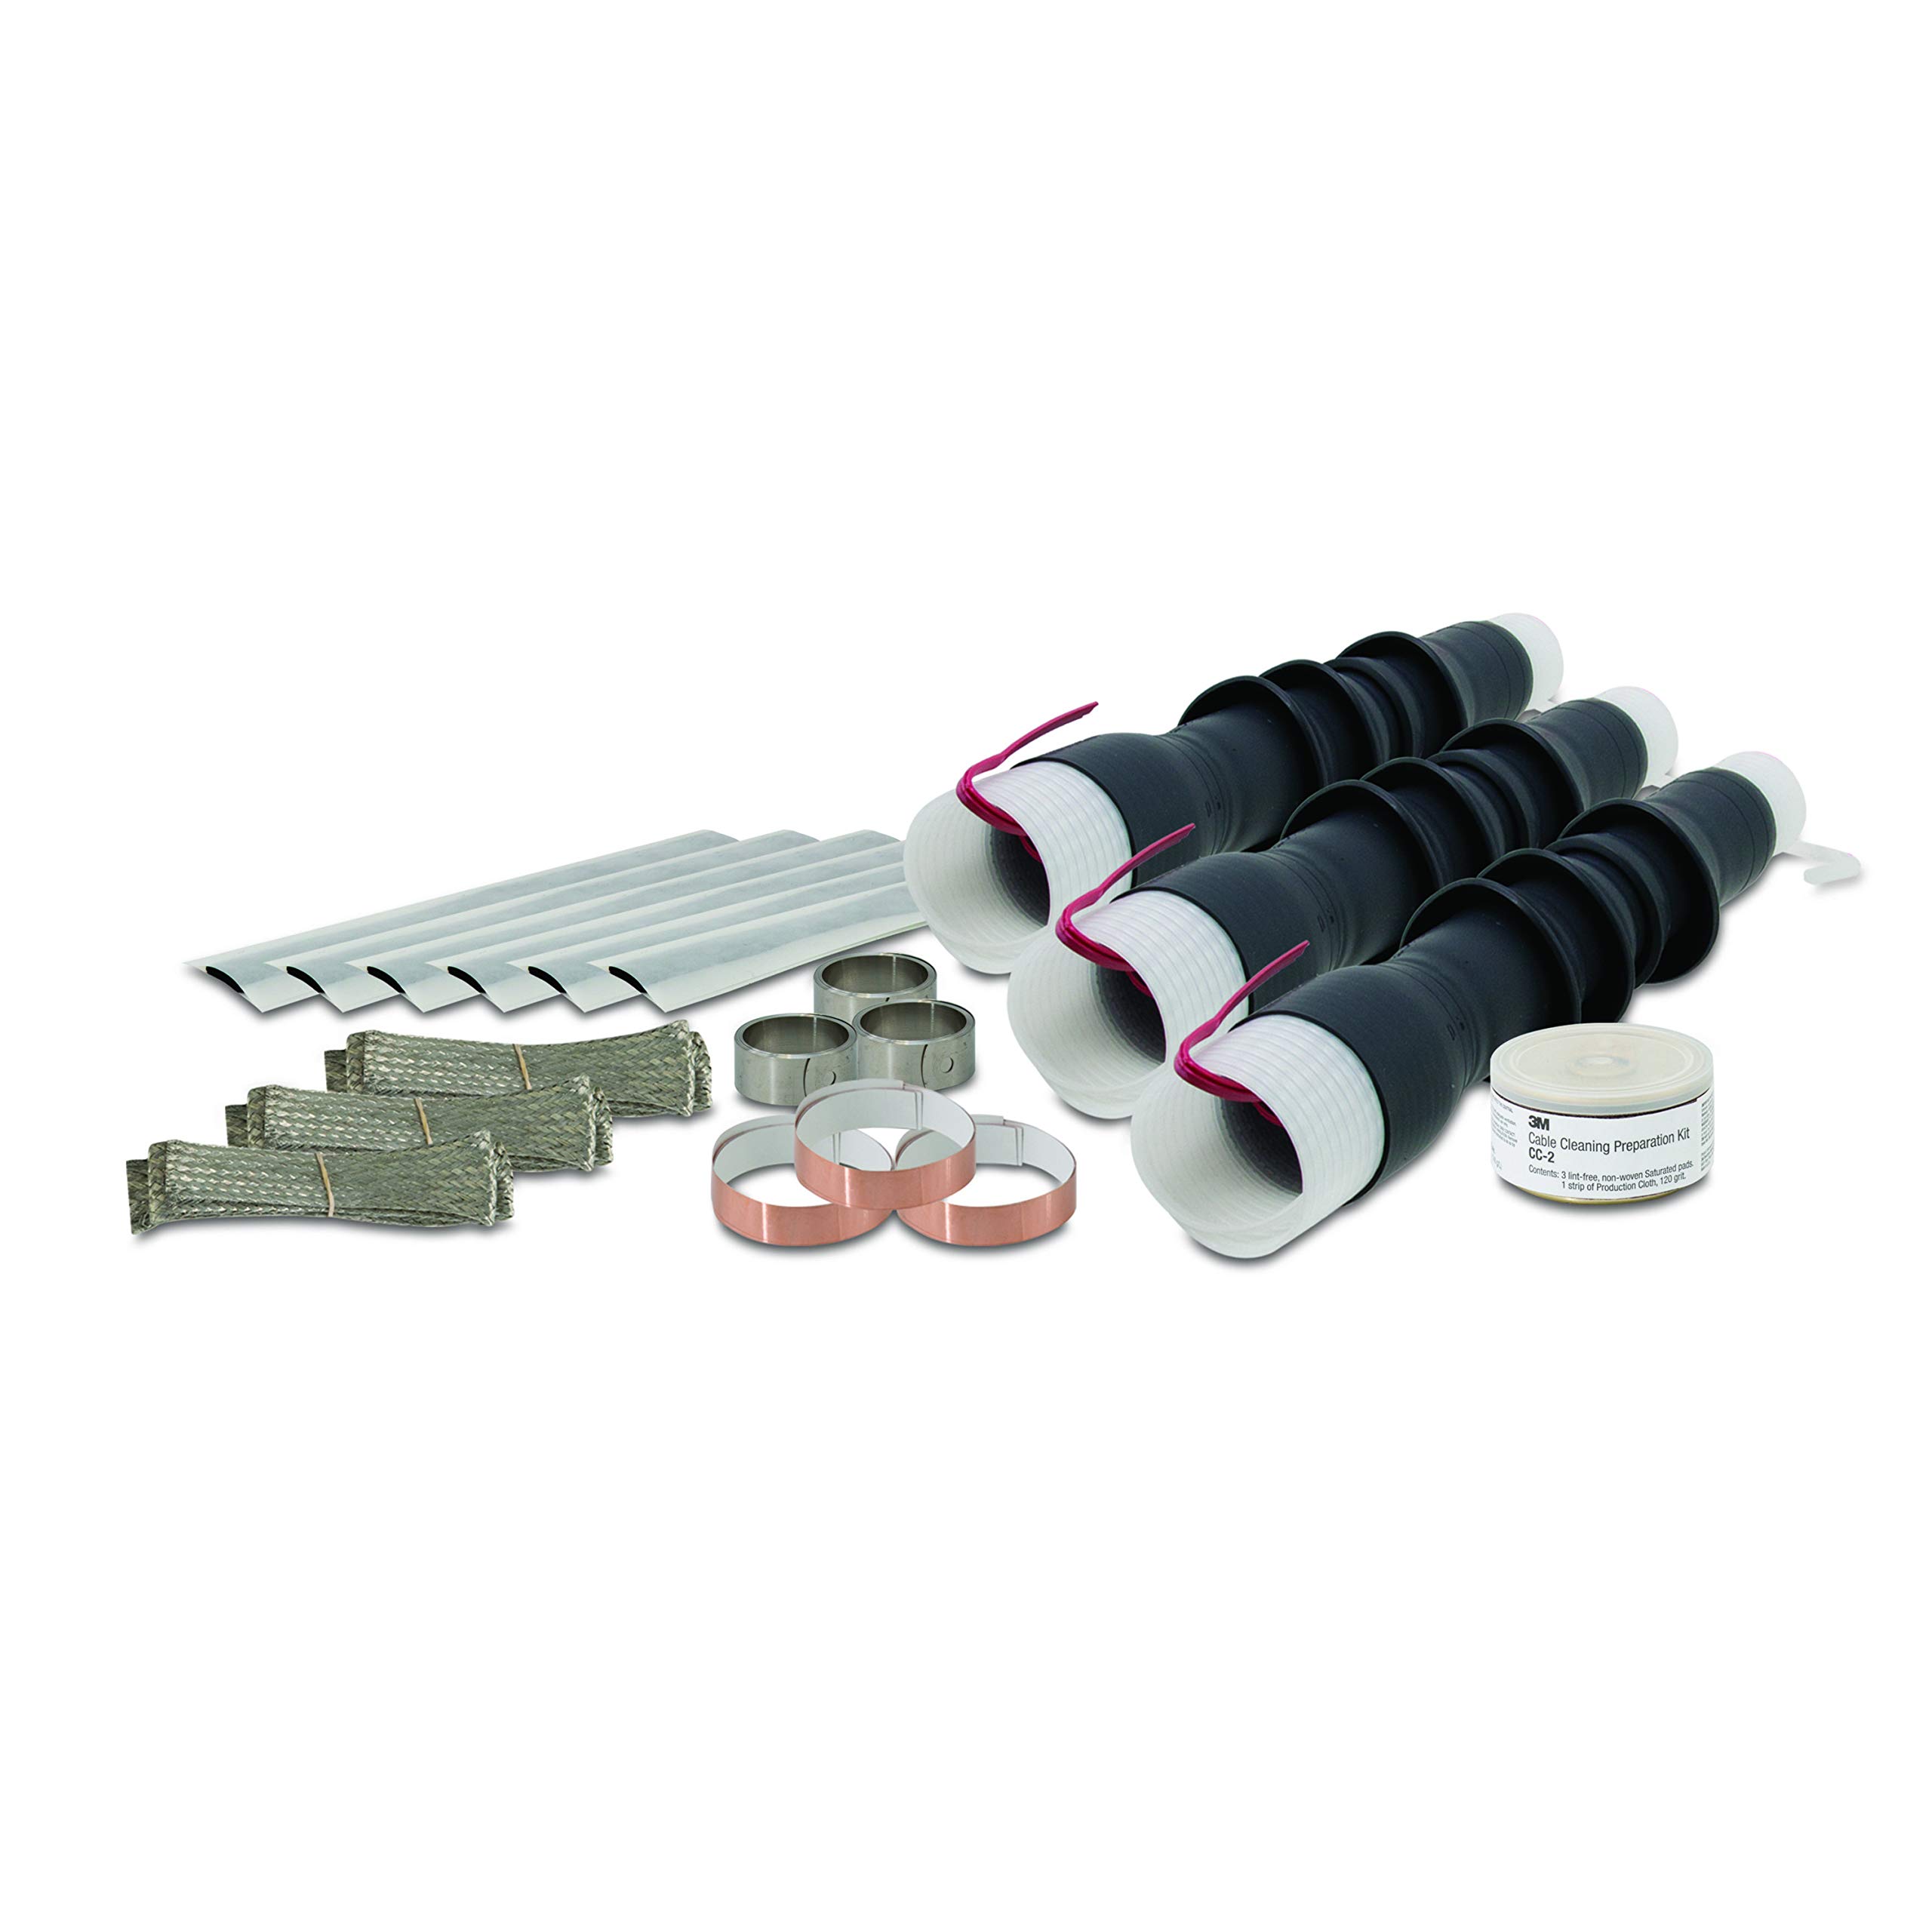 Cold Shrink QT-III 3/C Termination Kit 7694-T-150-3G, Tape/Wire/UniShield®, 5-35 kV, Insulation OD 0.92-1.18 in, 3/kit